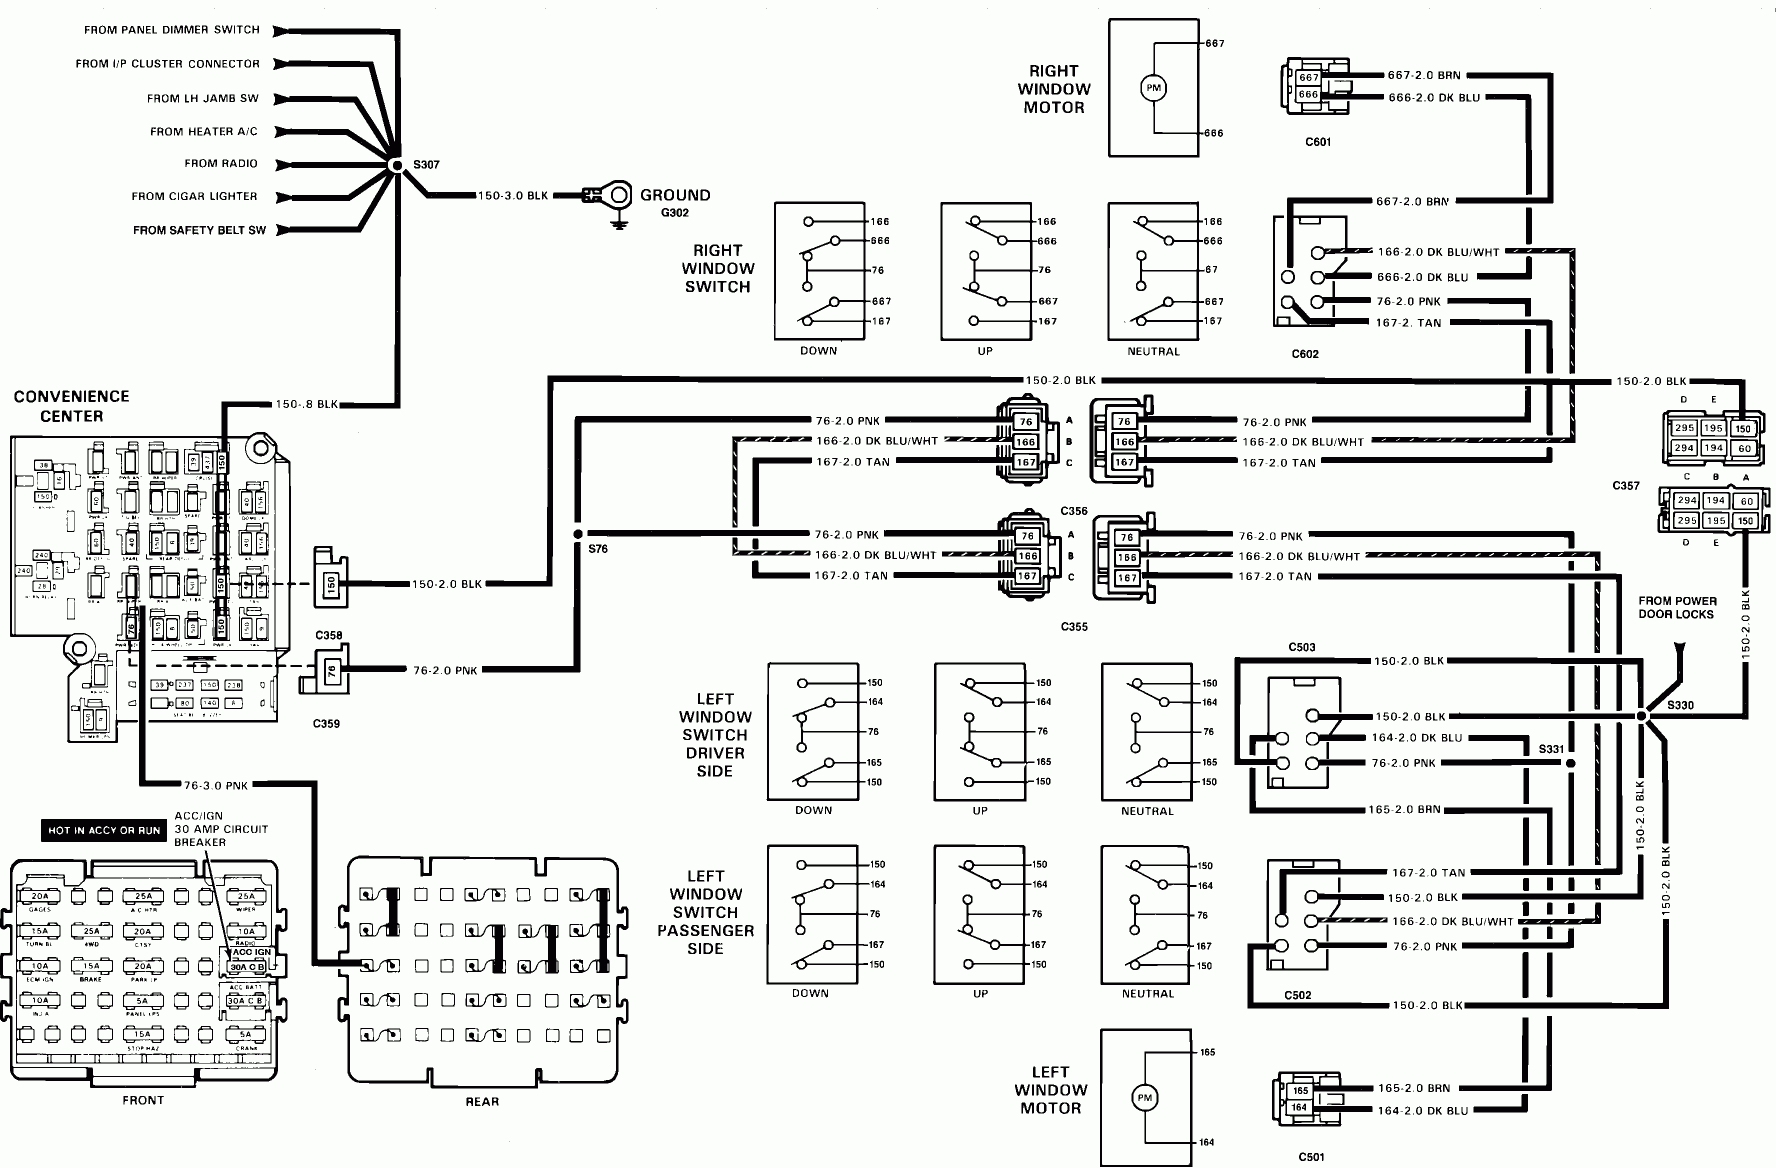 1992 Chevy Pickup Wiring Diagram | Schematic Diagram - Wiring Diagram For 1997 Chevy Silverado